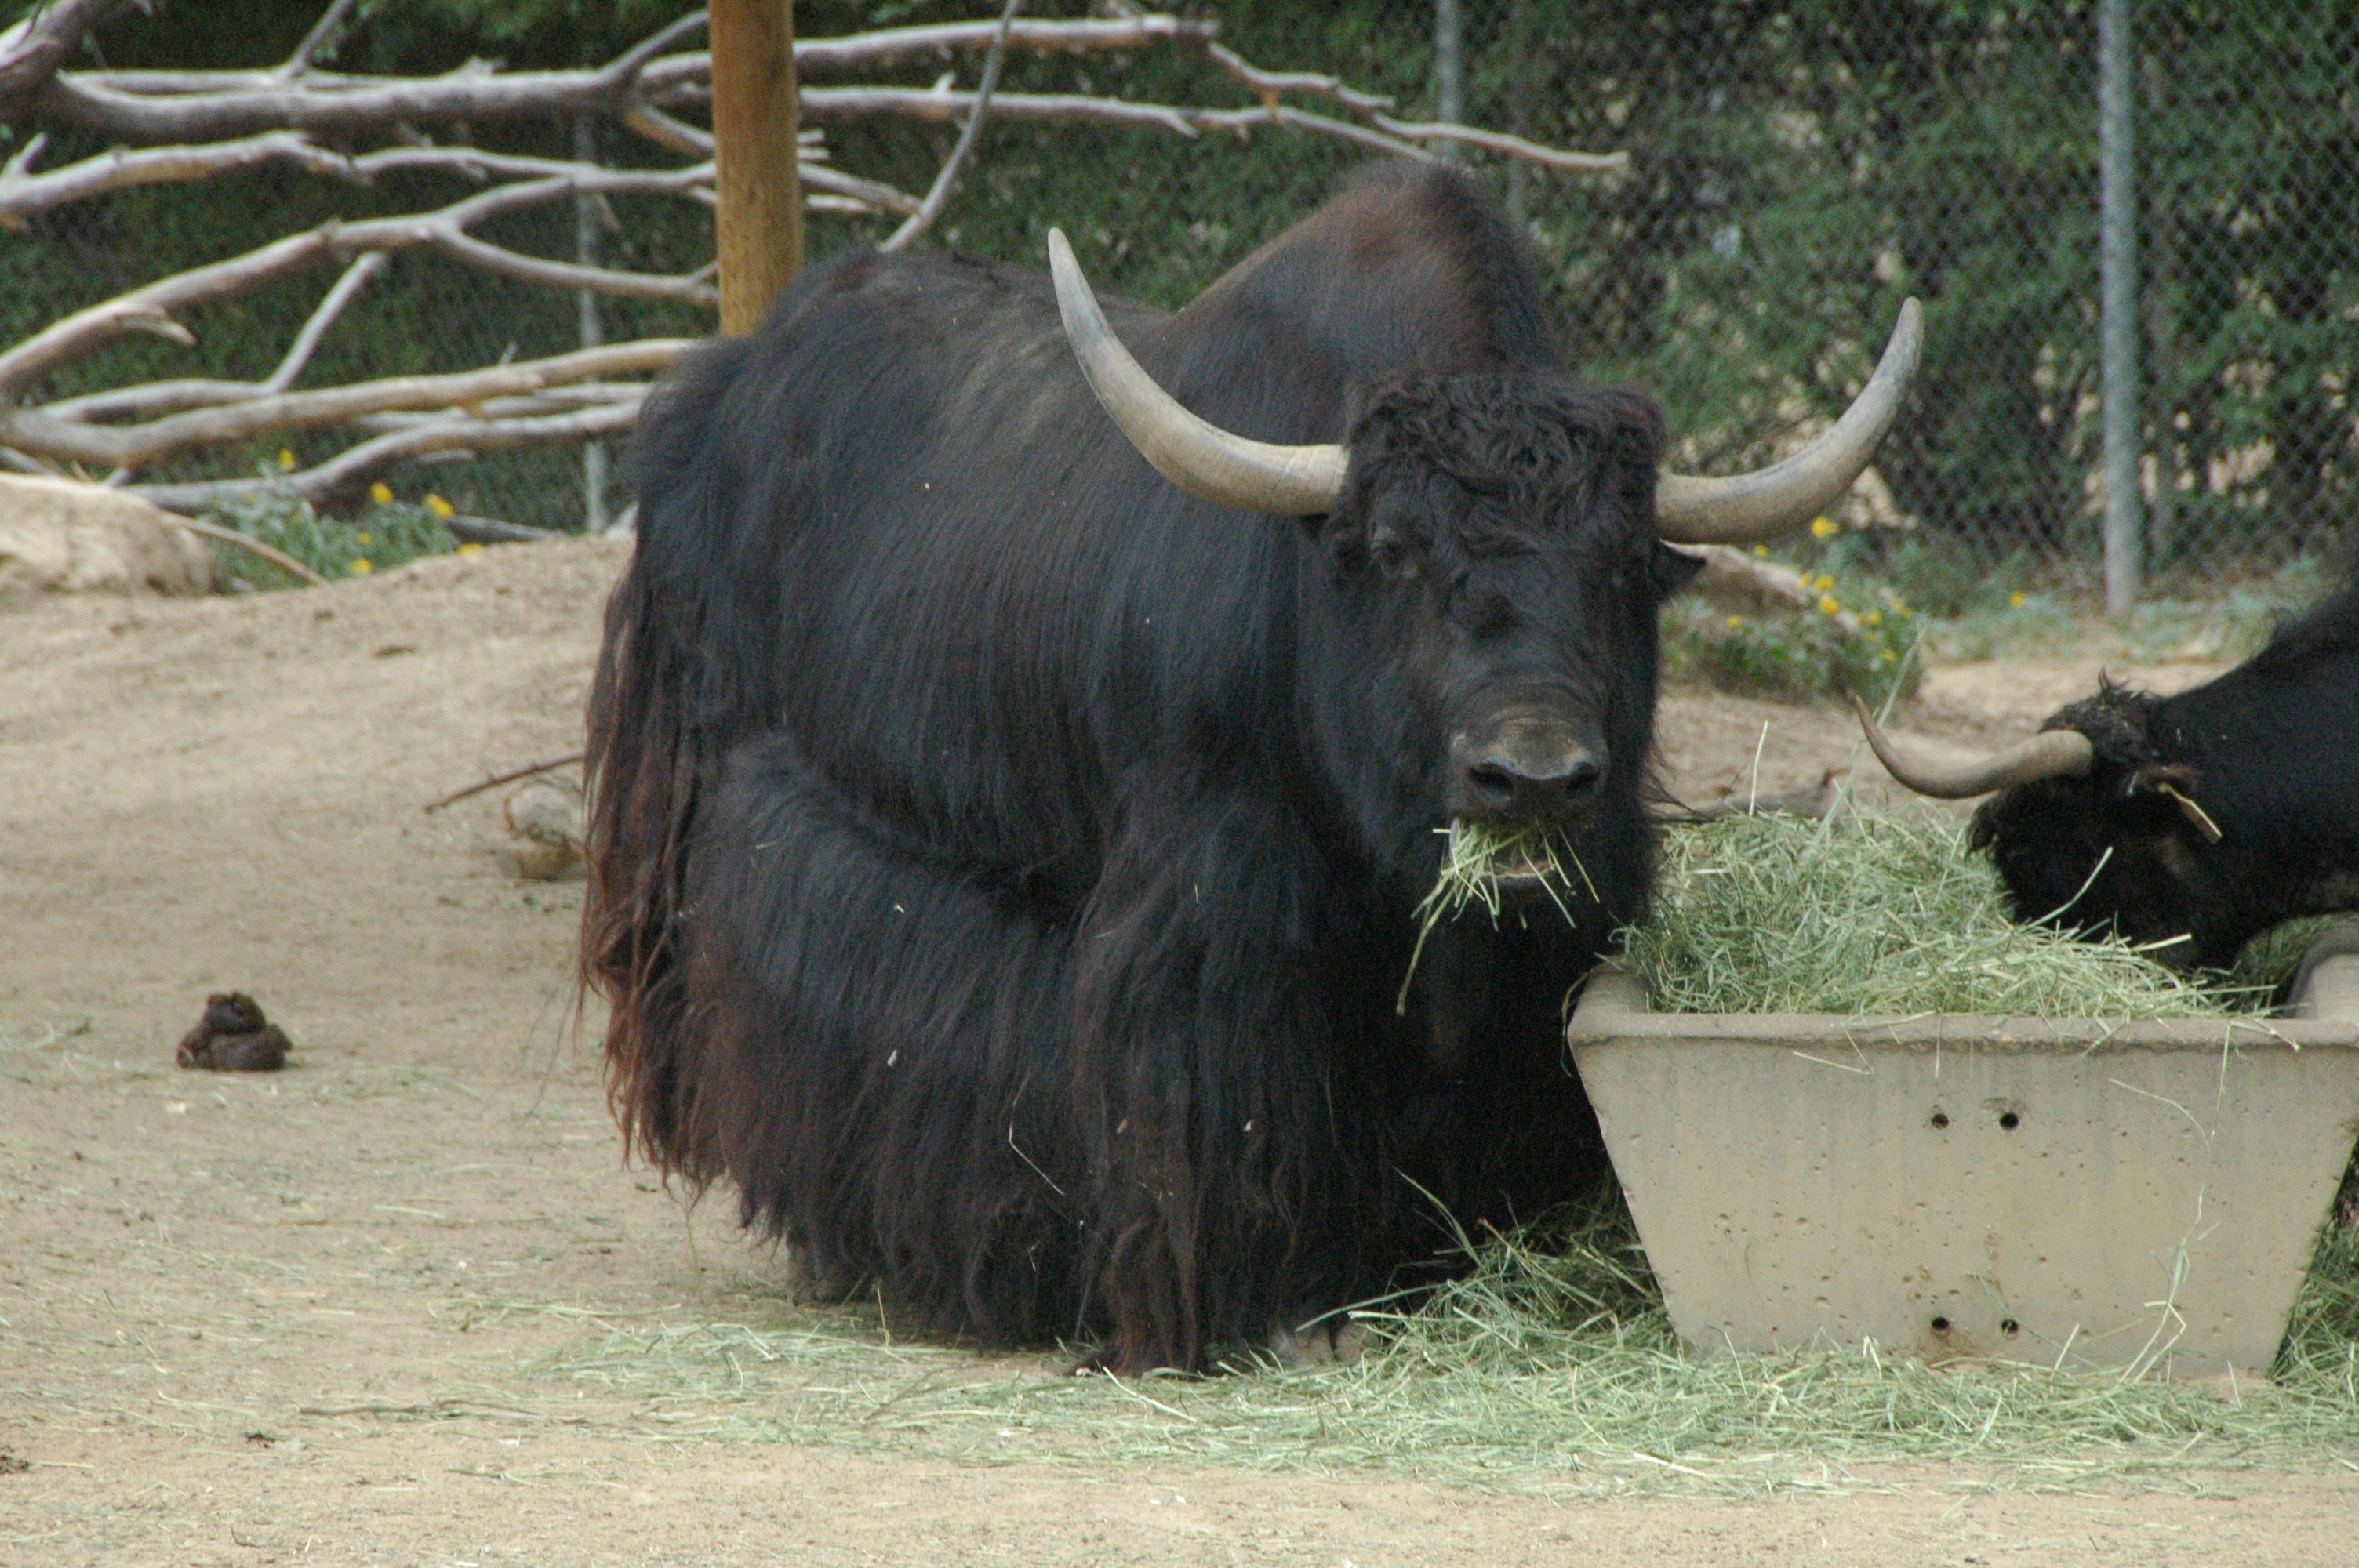 Beautiful black yak on a farm free image